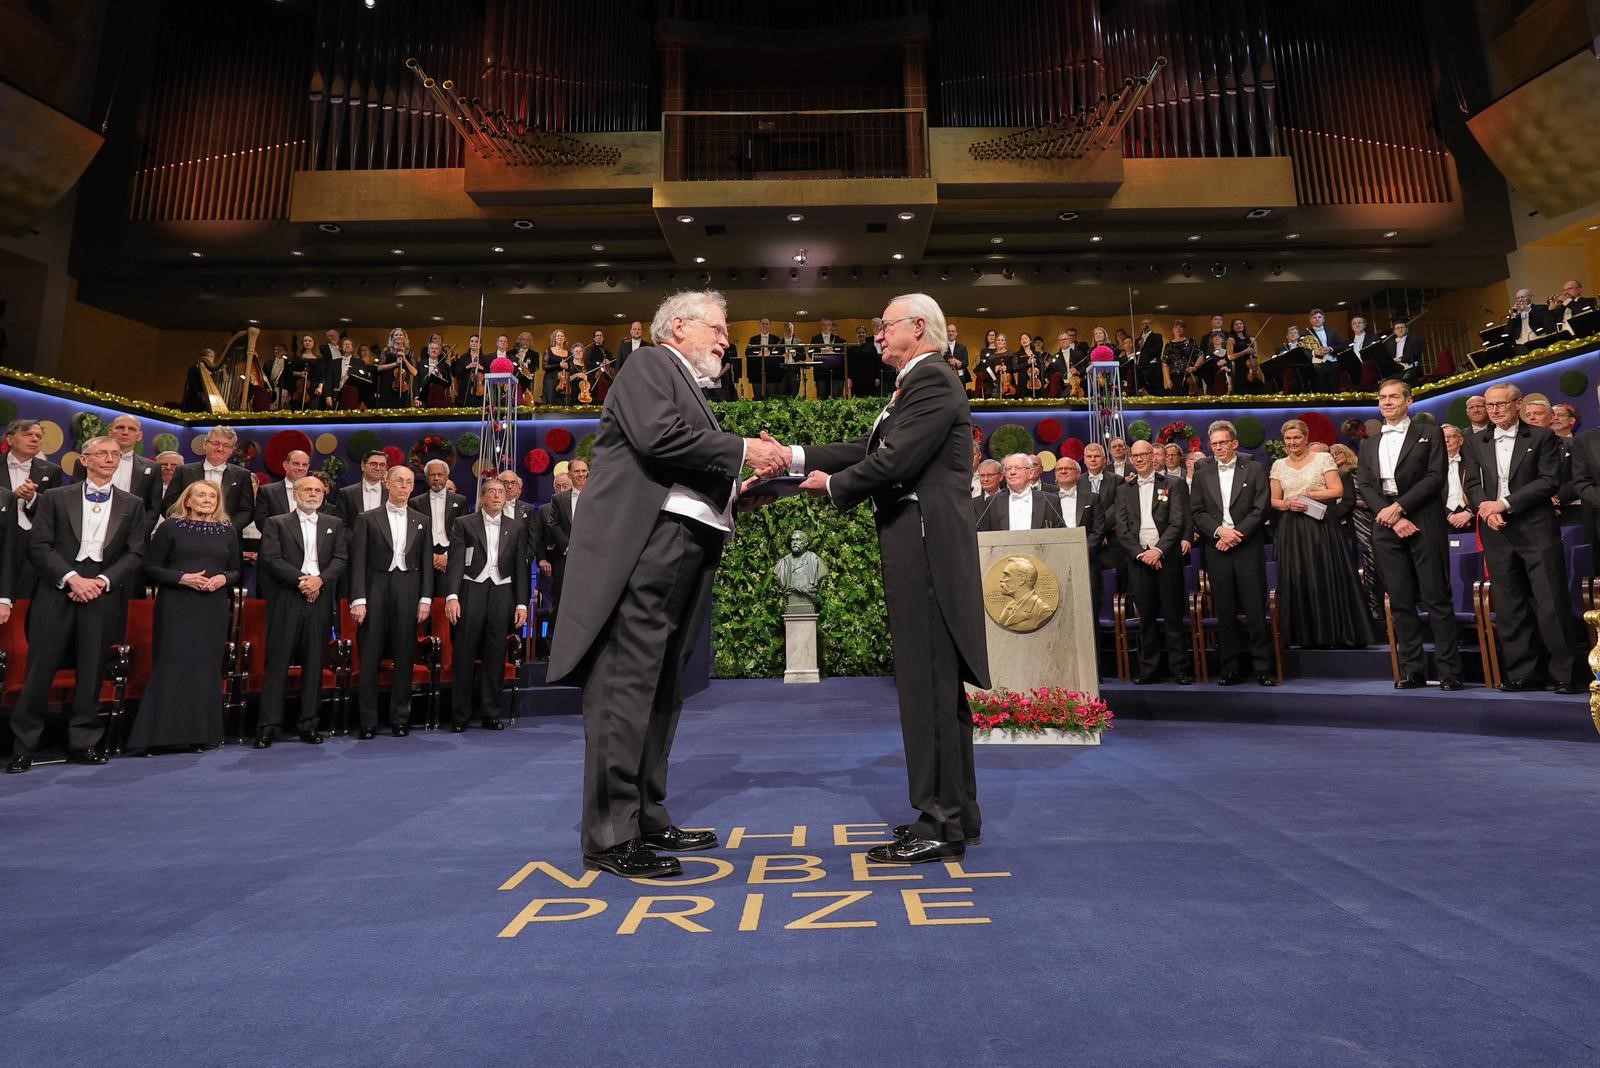 Picture of Anton Zeilinger receiving the golden Nobel medal from the King of Sweden